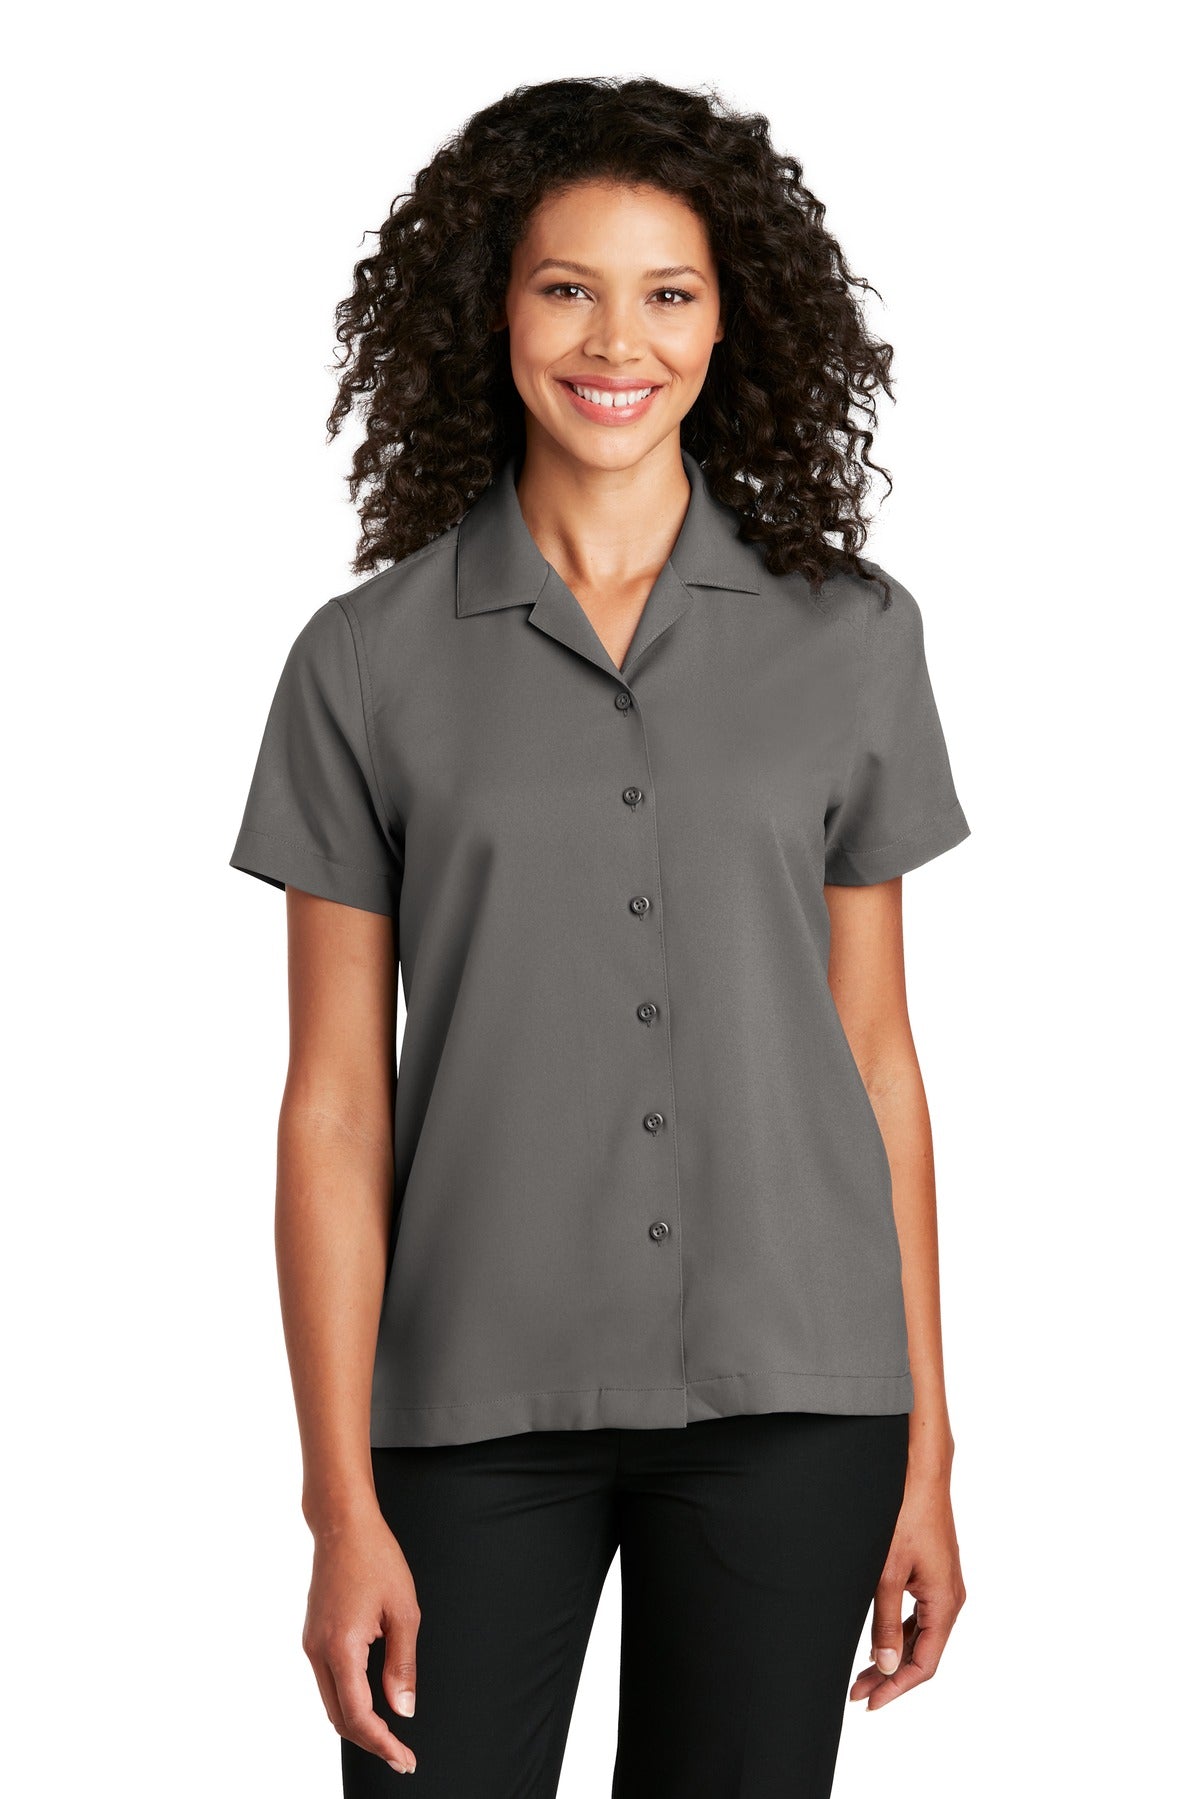 Port Authority ® Ladies Short Sleeve Performance Staff Shirt LW400 - DFW Impression